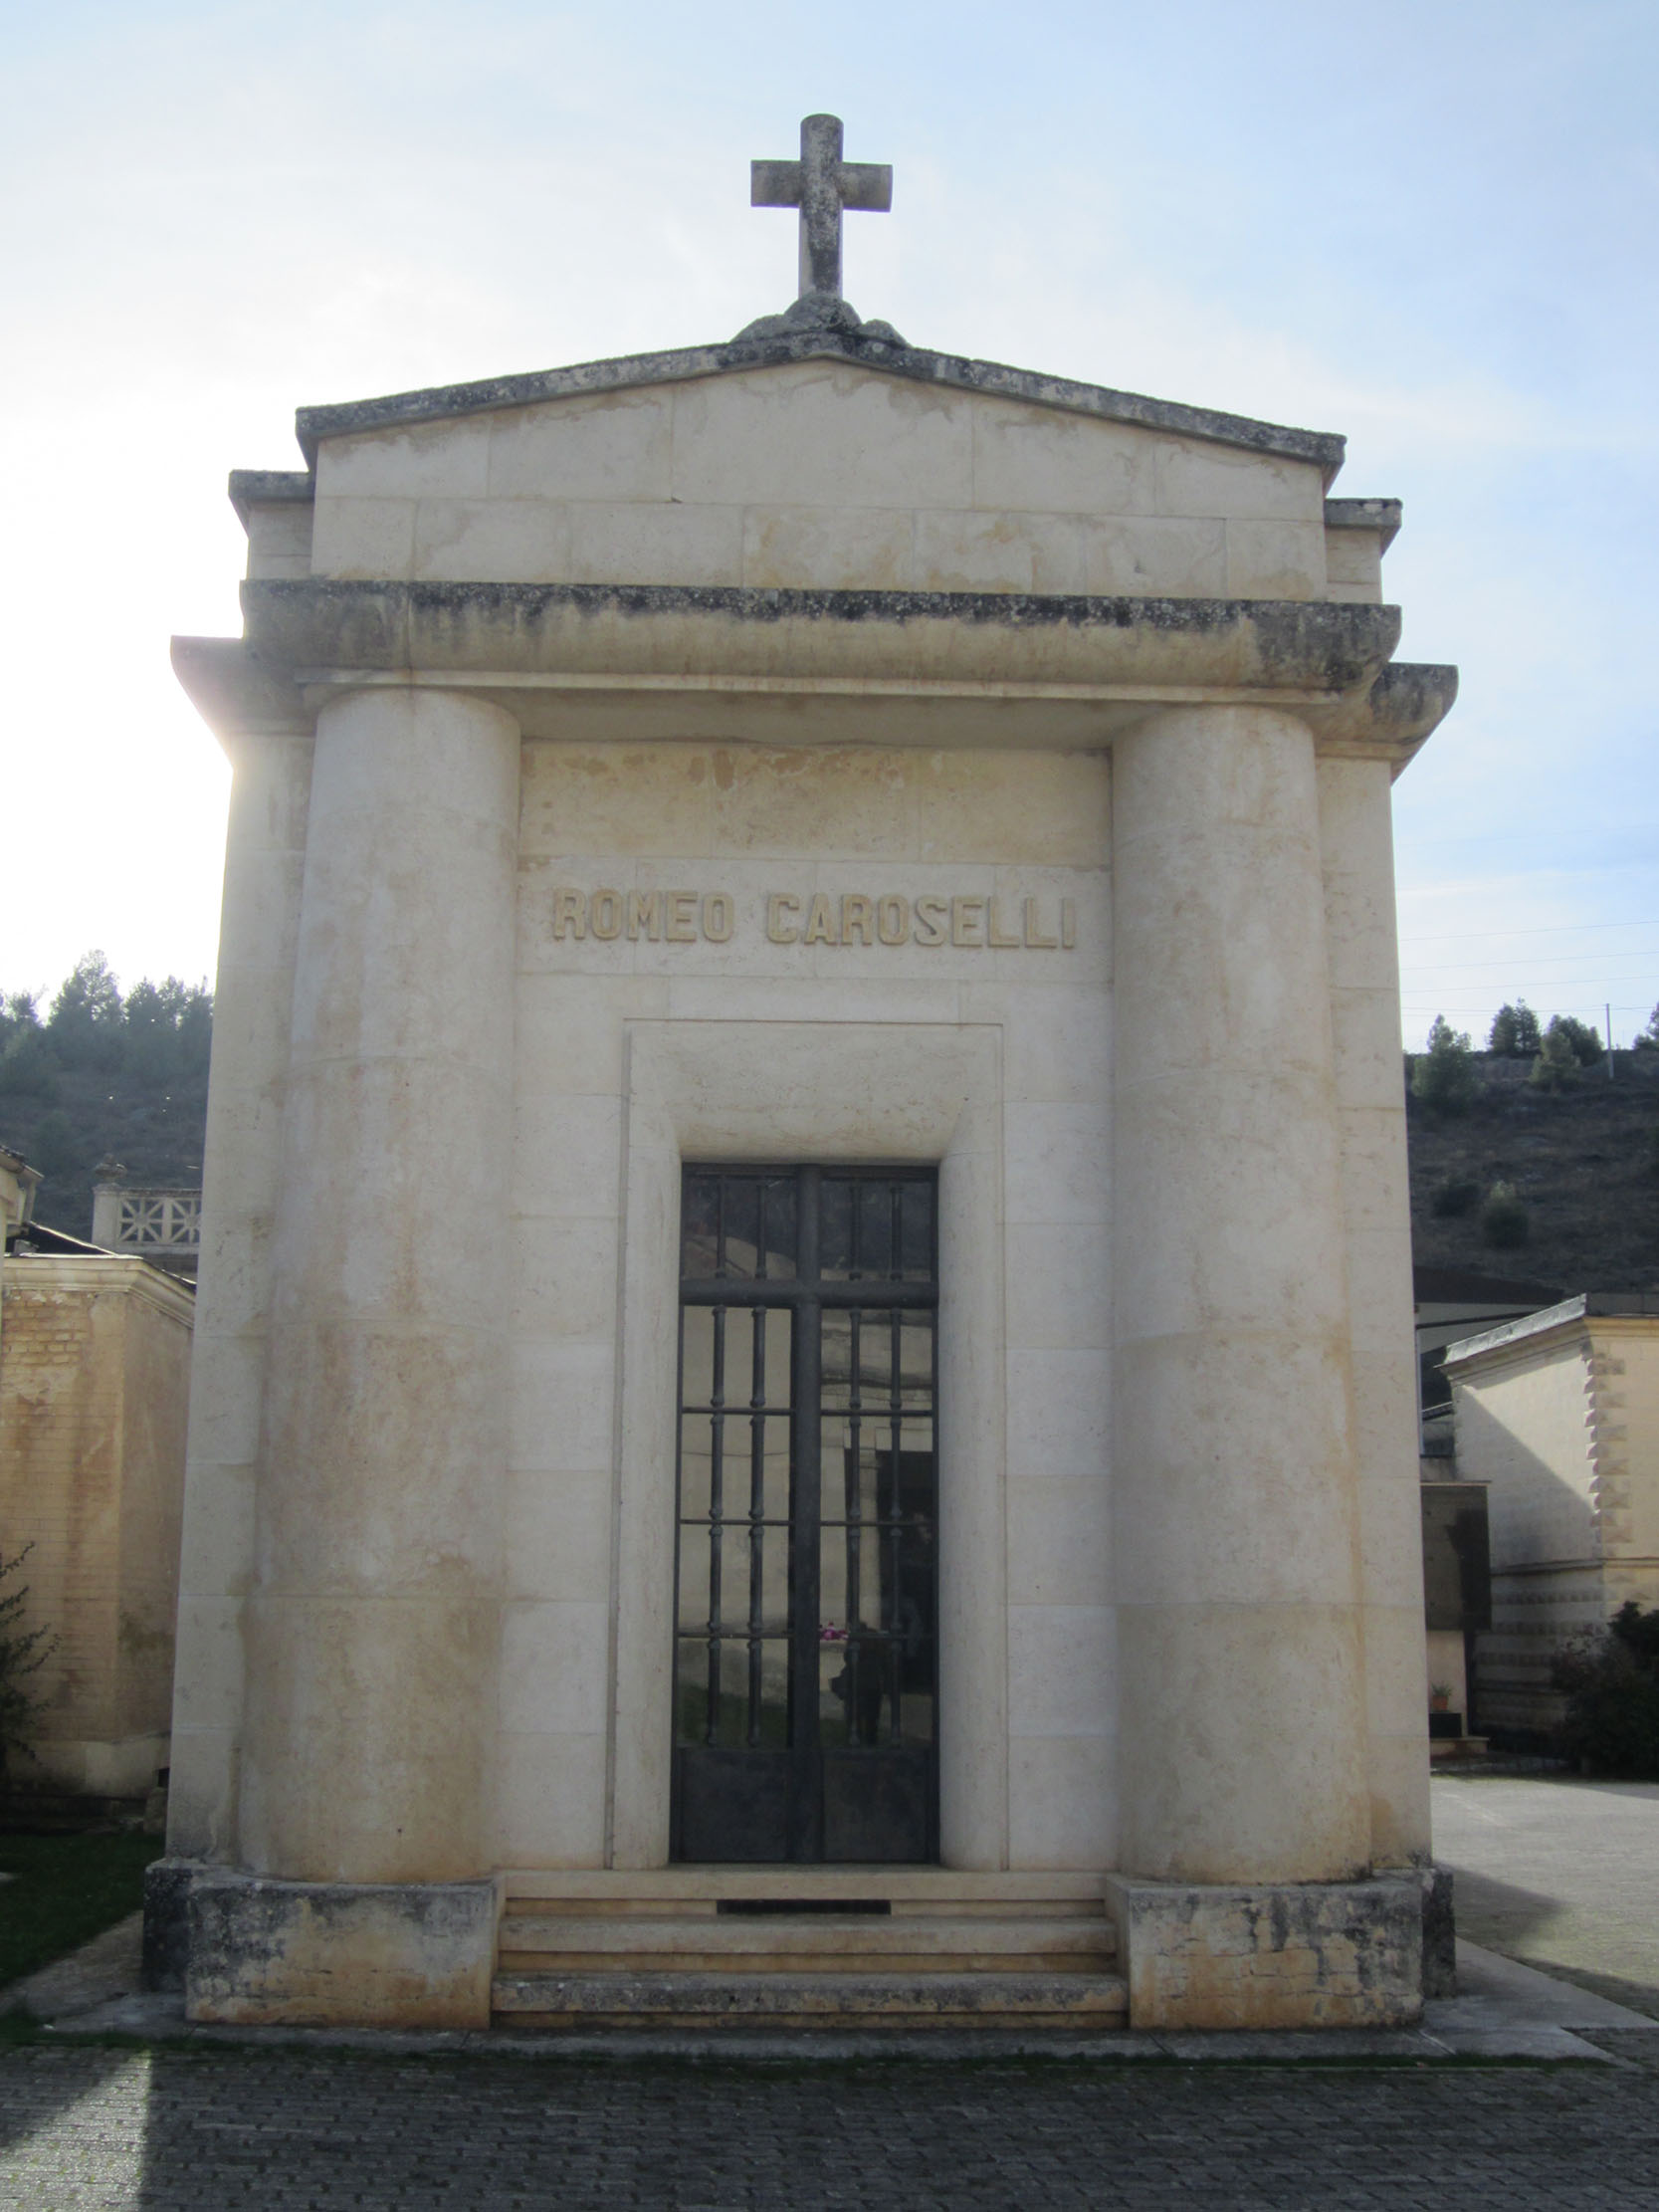 Cappella cimiteriale Romeo Caroselli (cimitero, monumentale) - Sulmona (AQ) 